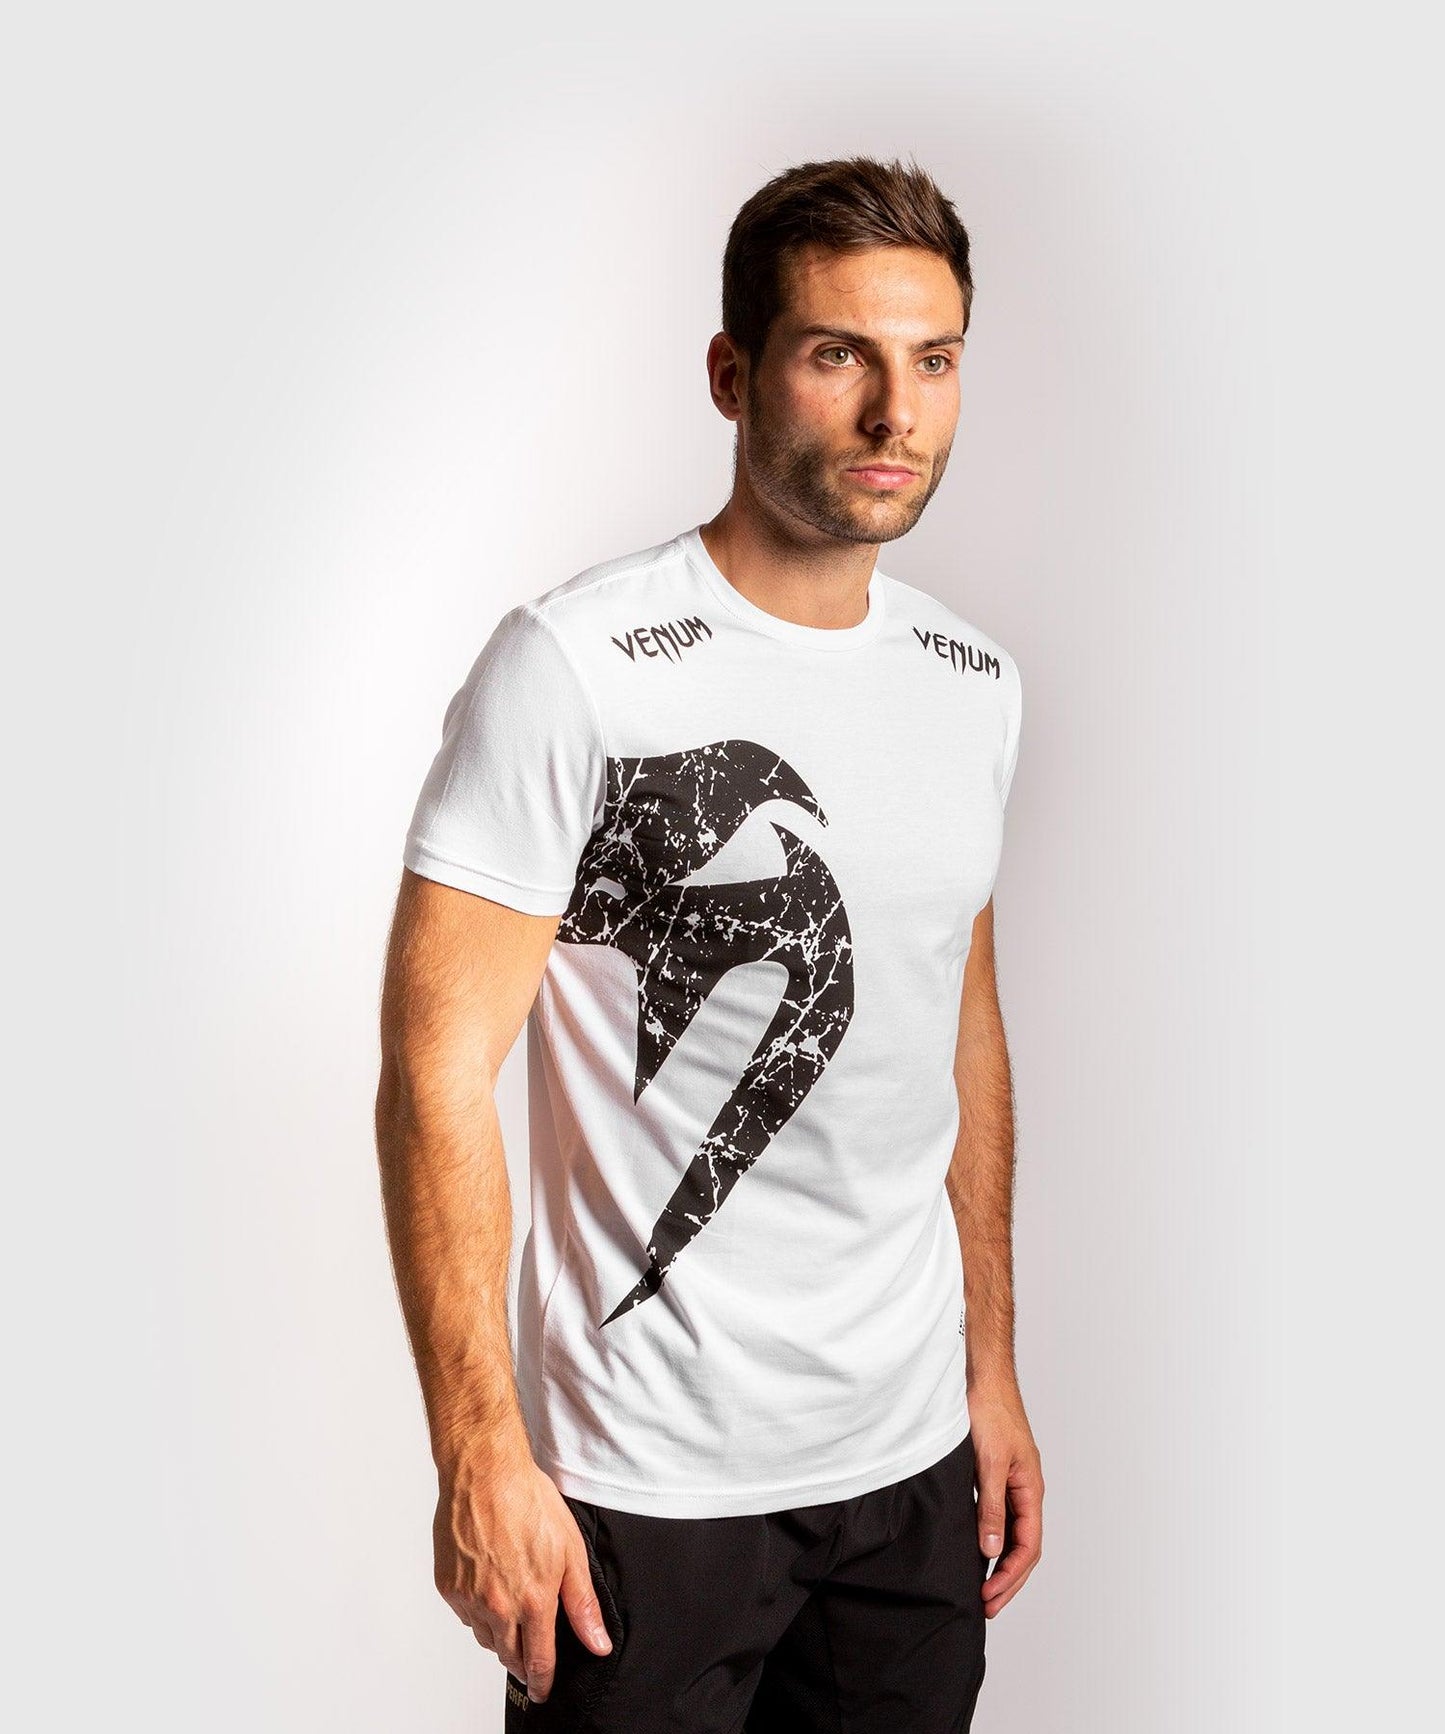 Venum Giant T-shirt - White Picture 3